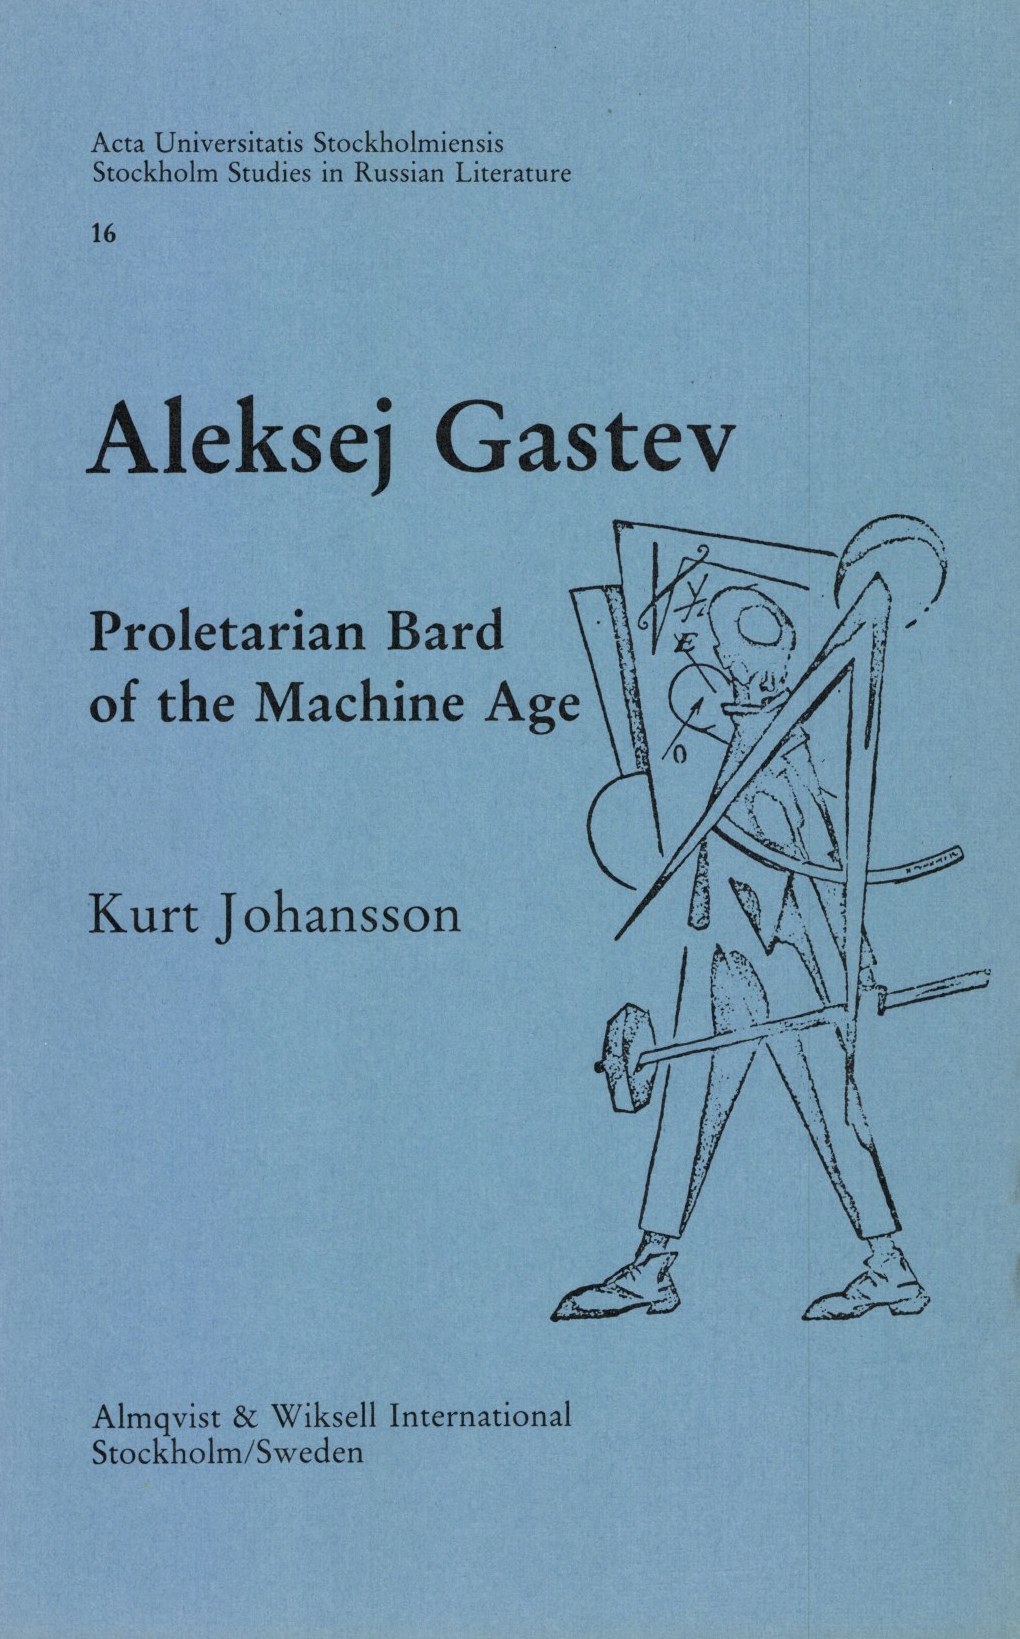 Aleksej Gastev: Proletarian Bard of the Machine Age / by Kurt Johansson. — Stockholm : Almqvist & Wiksell International, 1983